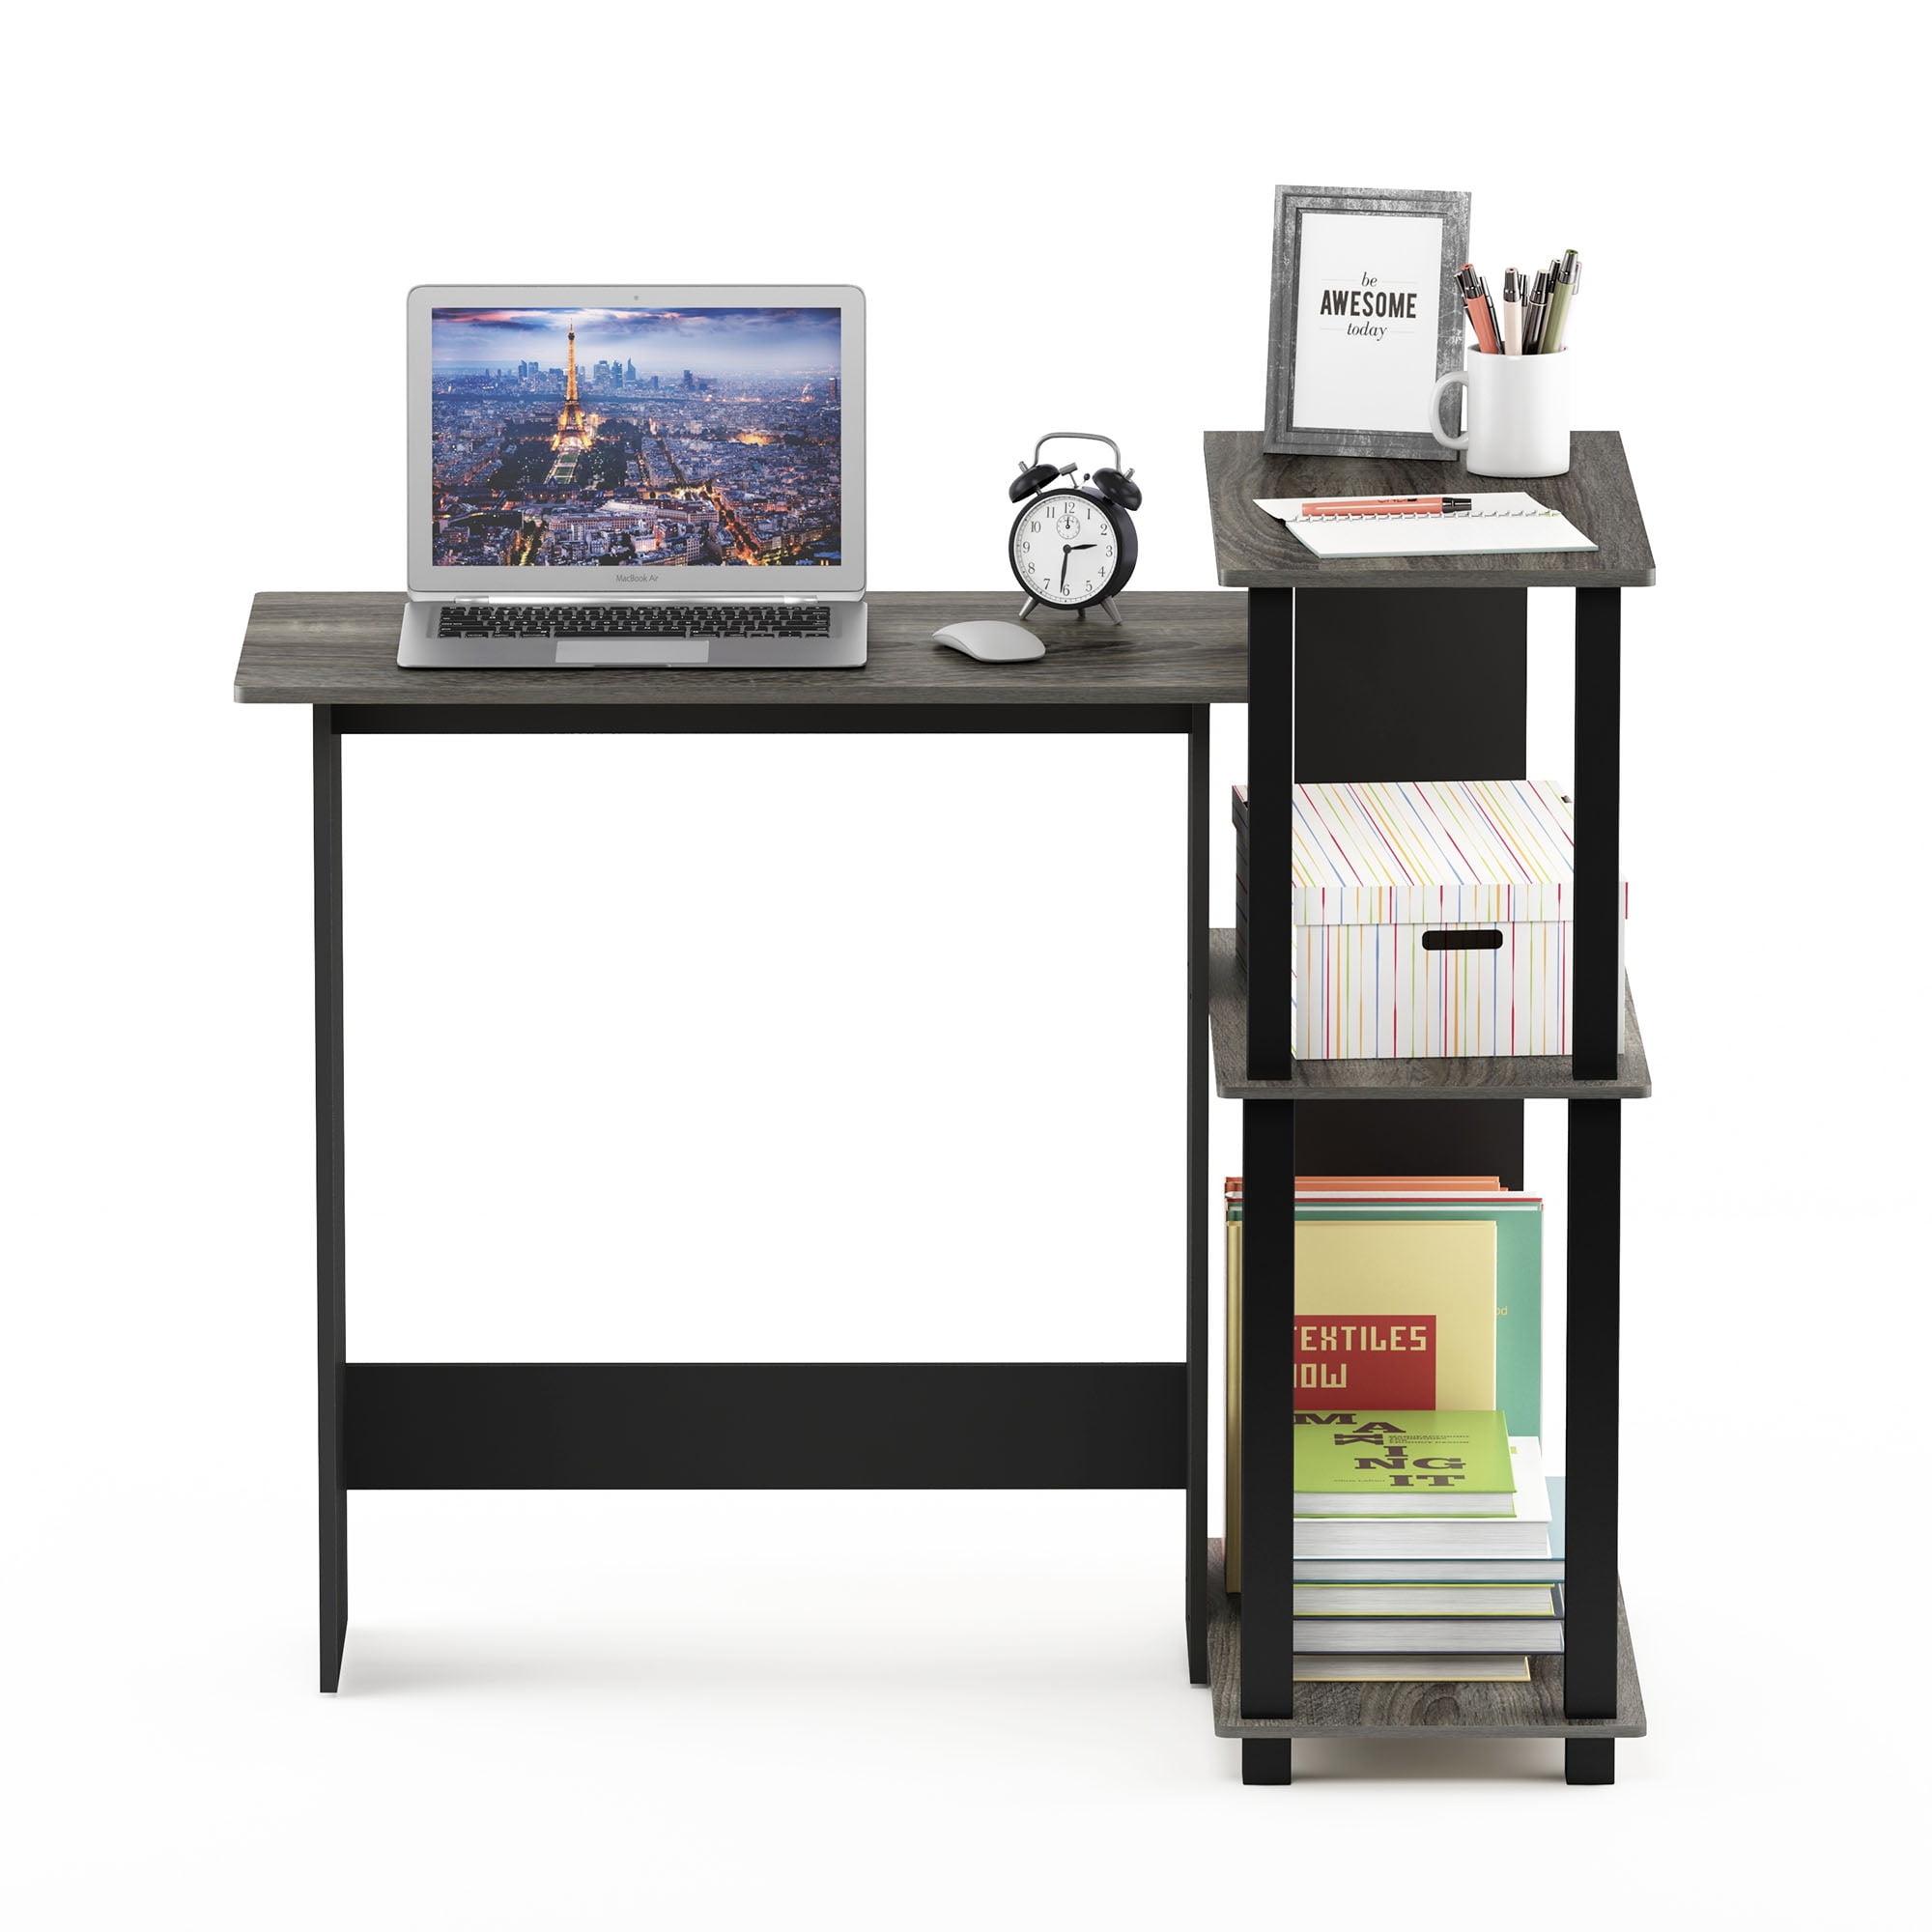 Lego Office Corner Desk Computer Printer Coffee Machine Woman